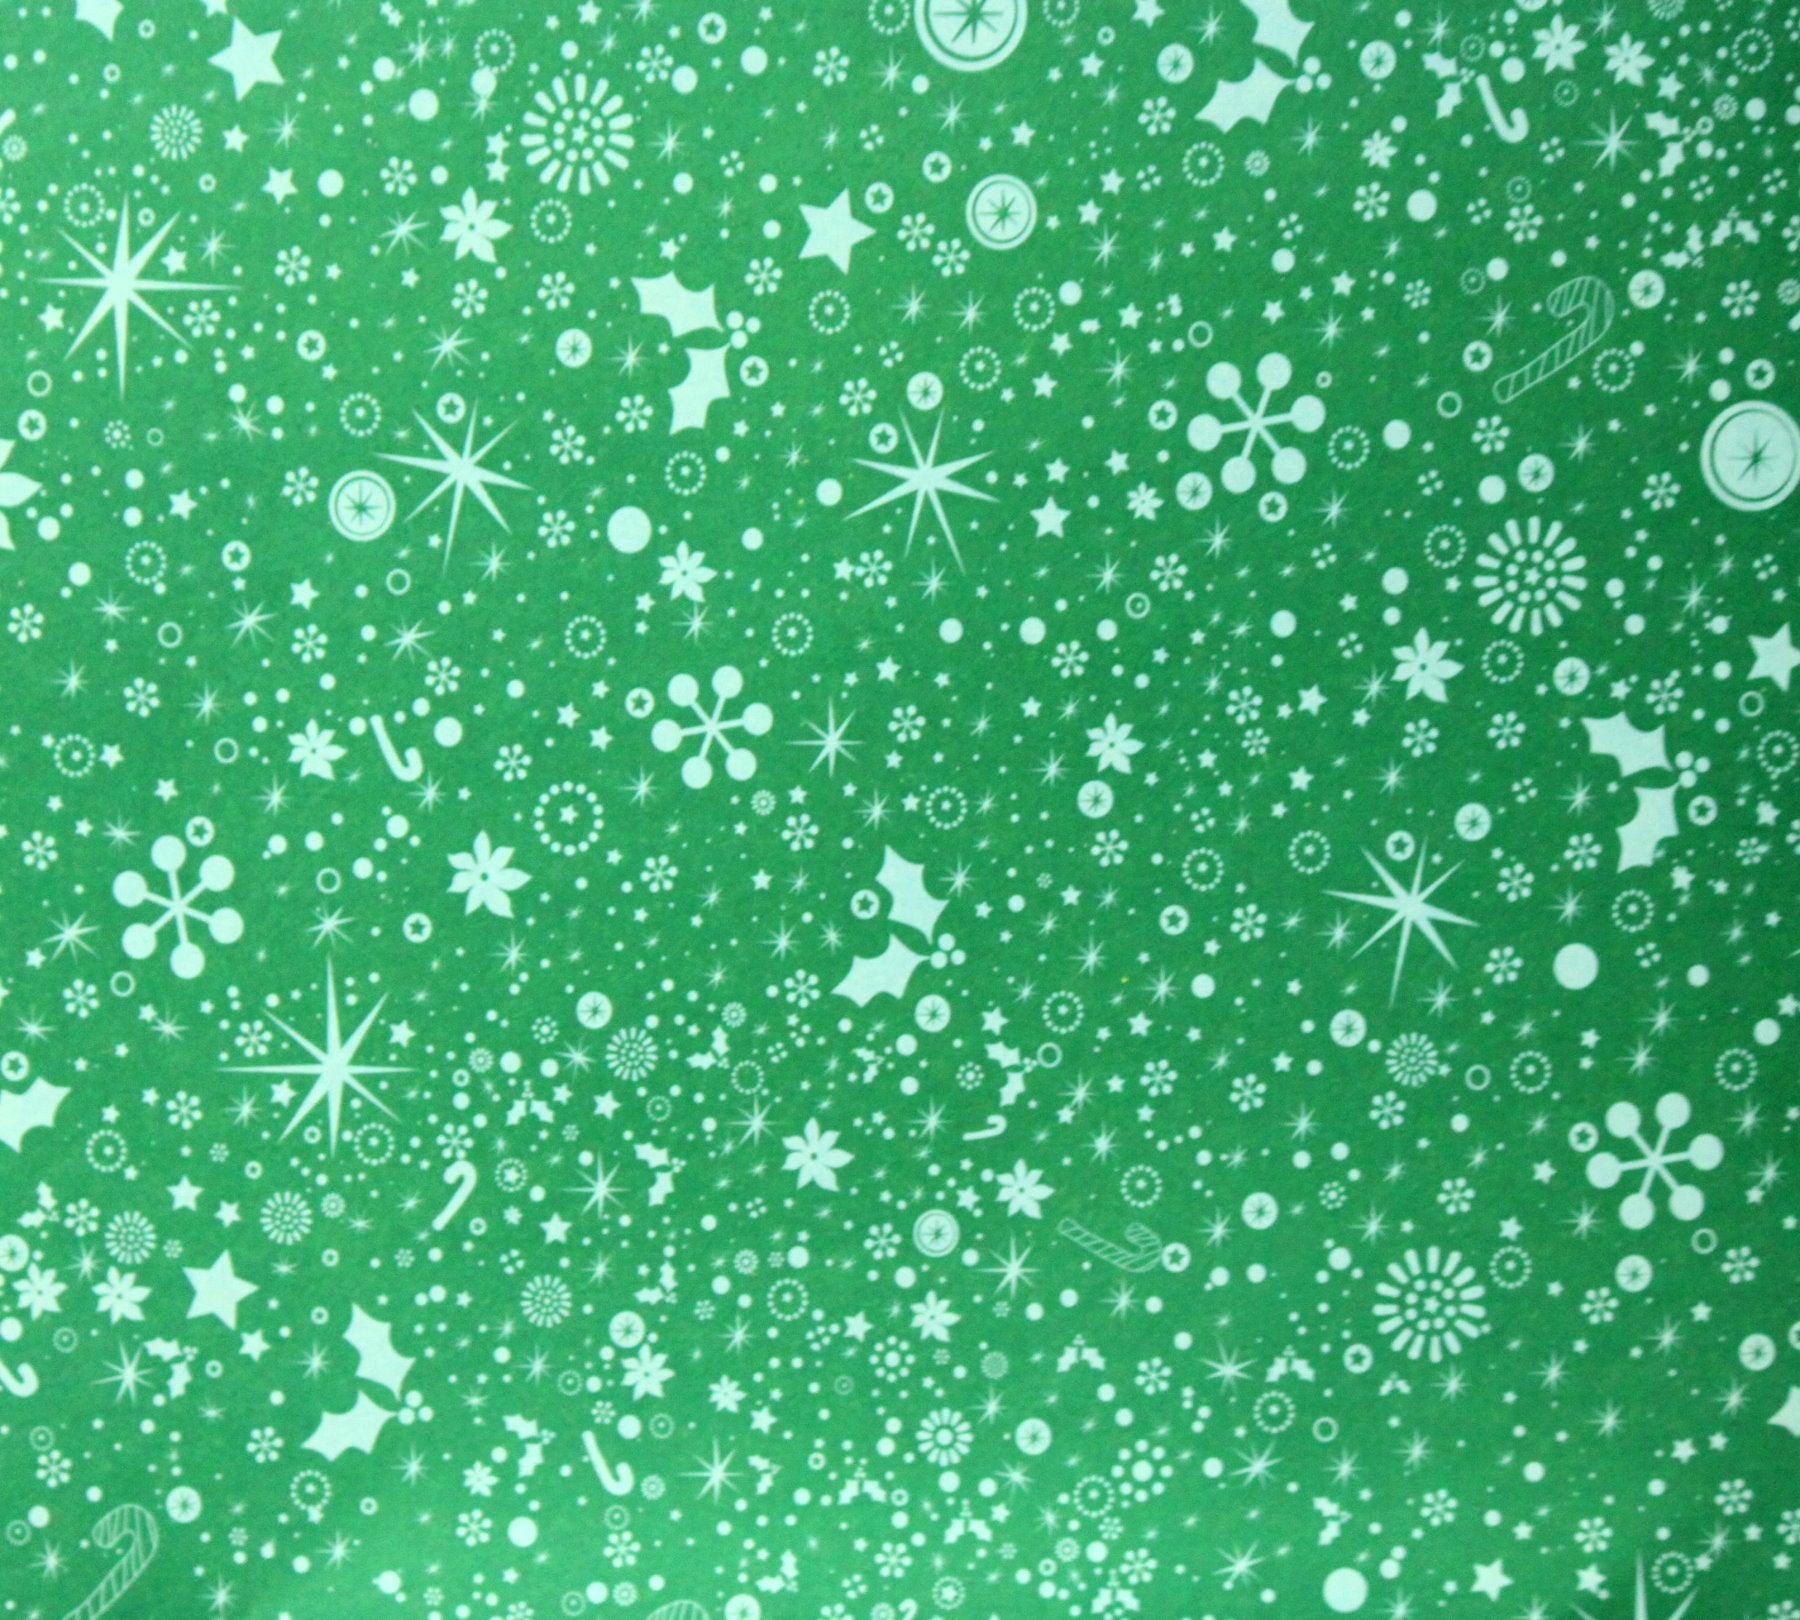 DCWV 12 x 12 Christmas Snowflakes Scrapbook Paper